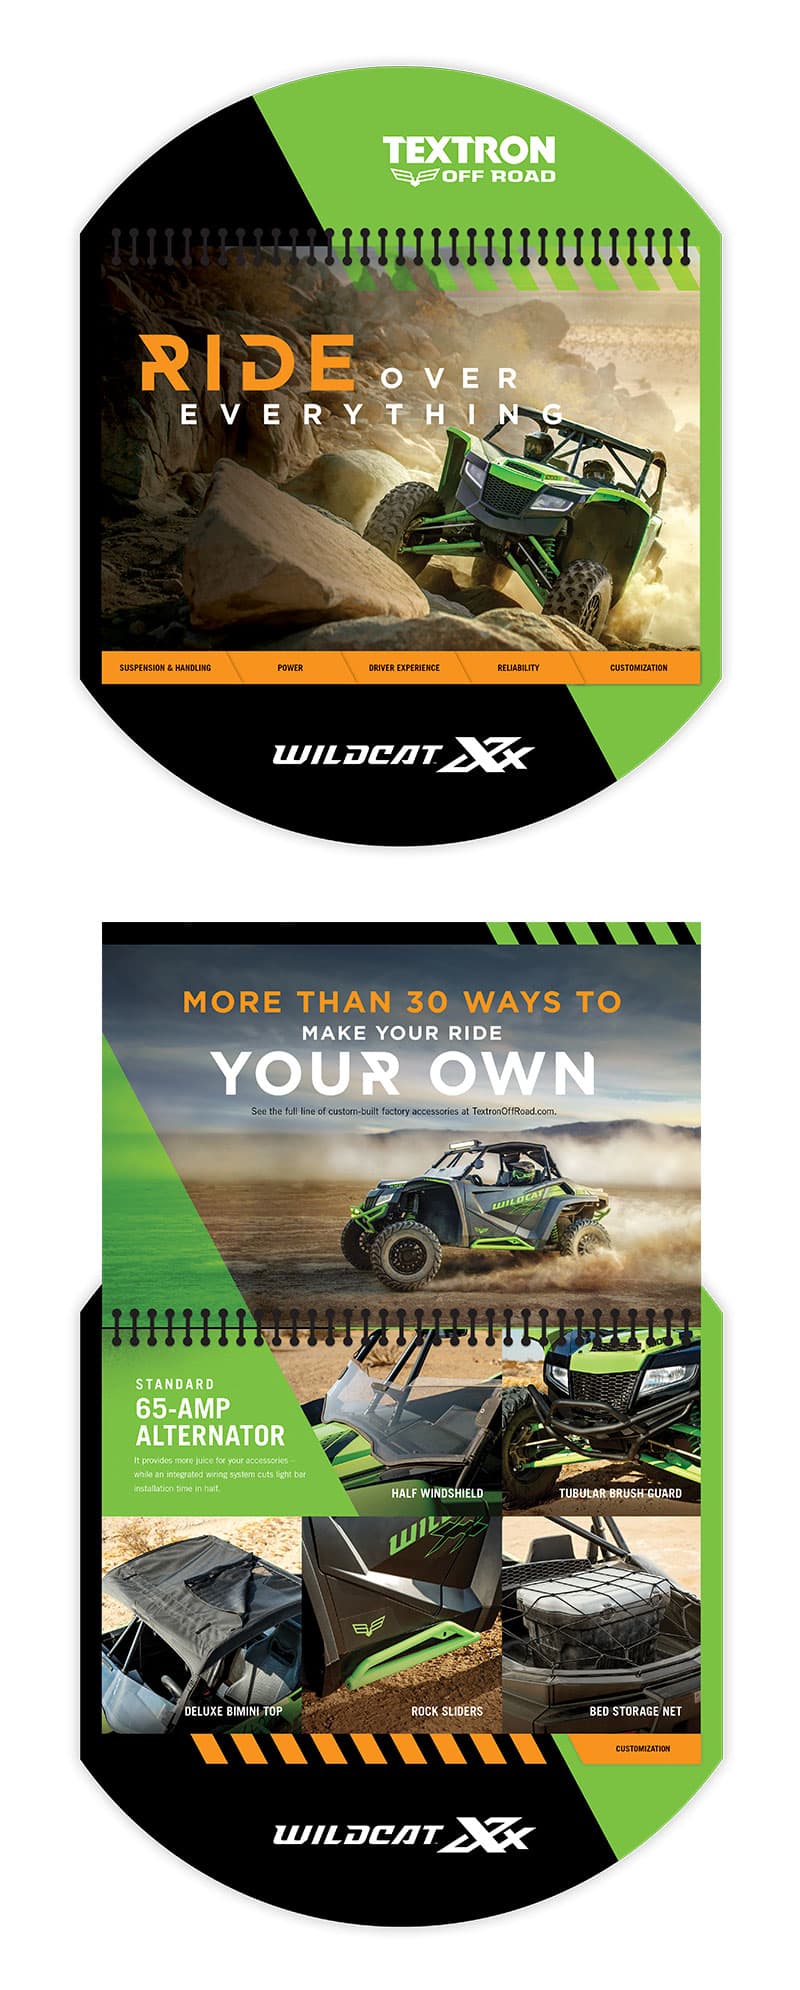 Wildcat XX Point-of-Sale Signage